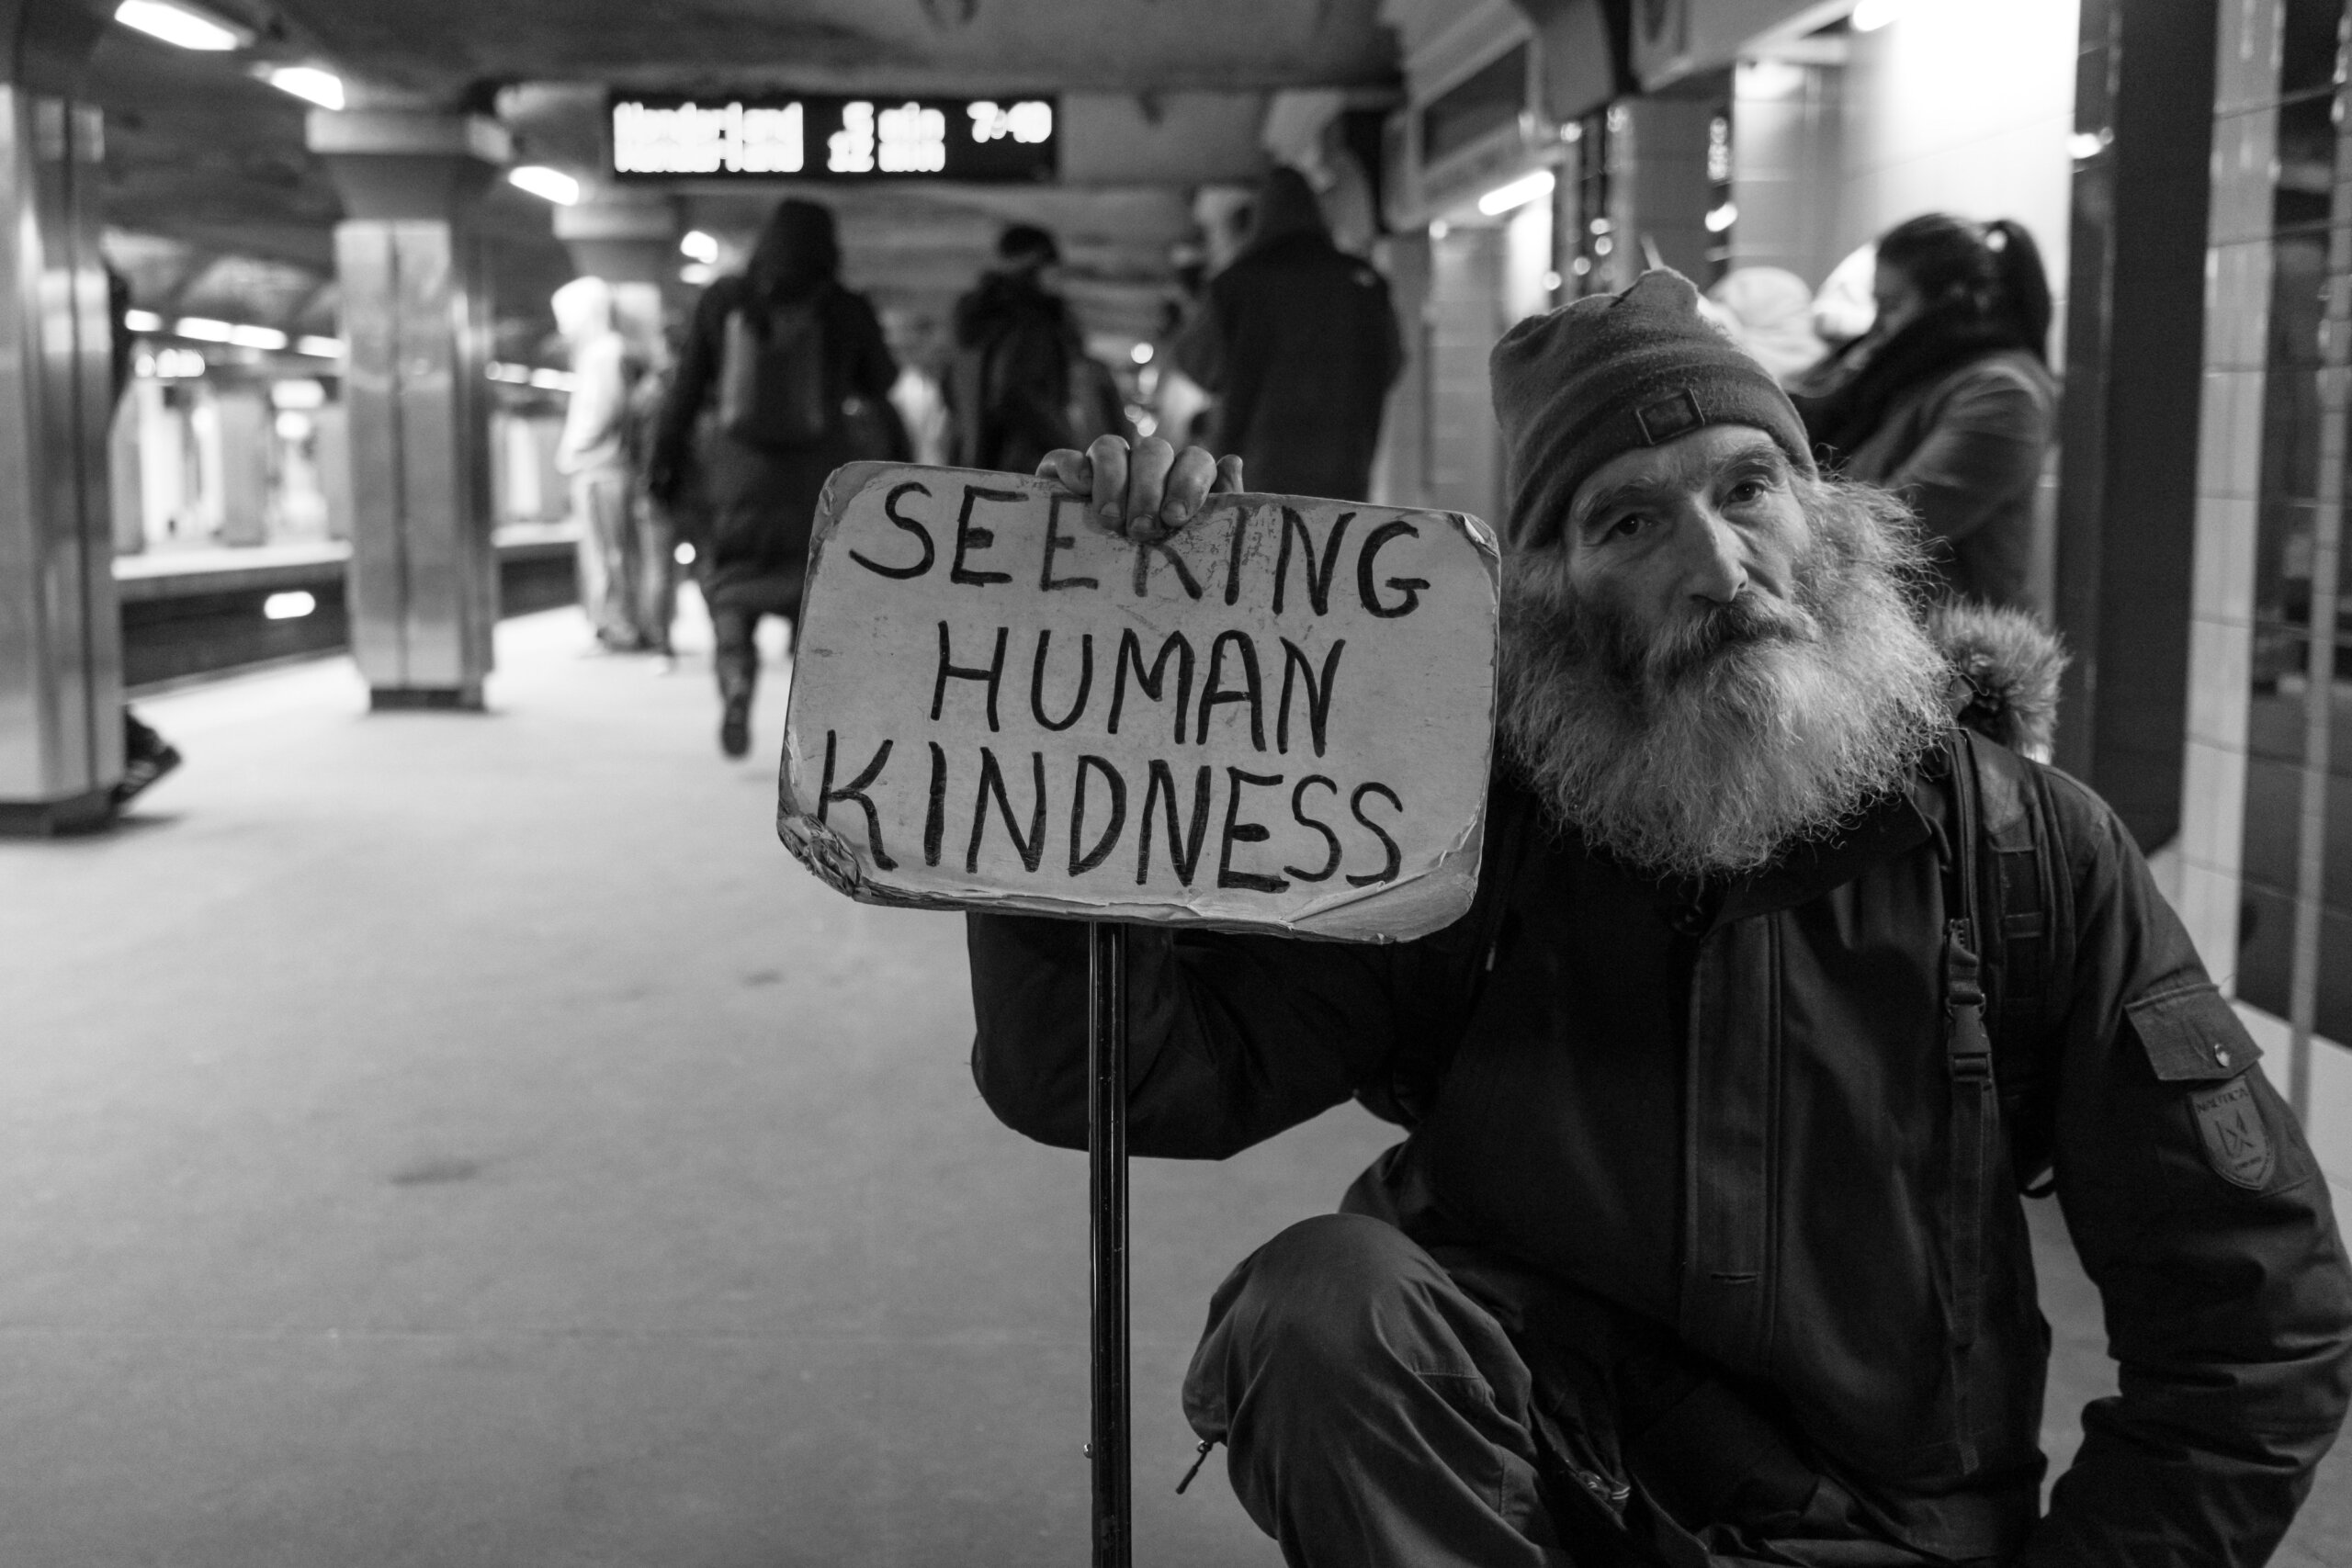 ljubaznost kindness